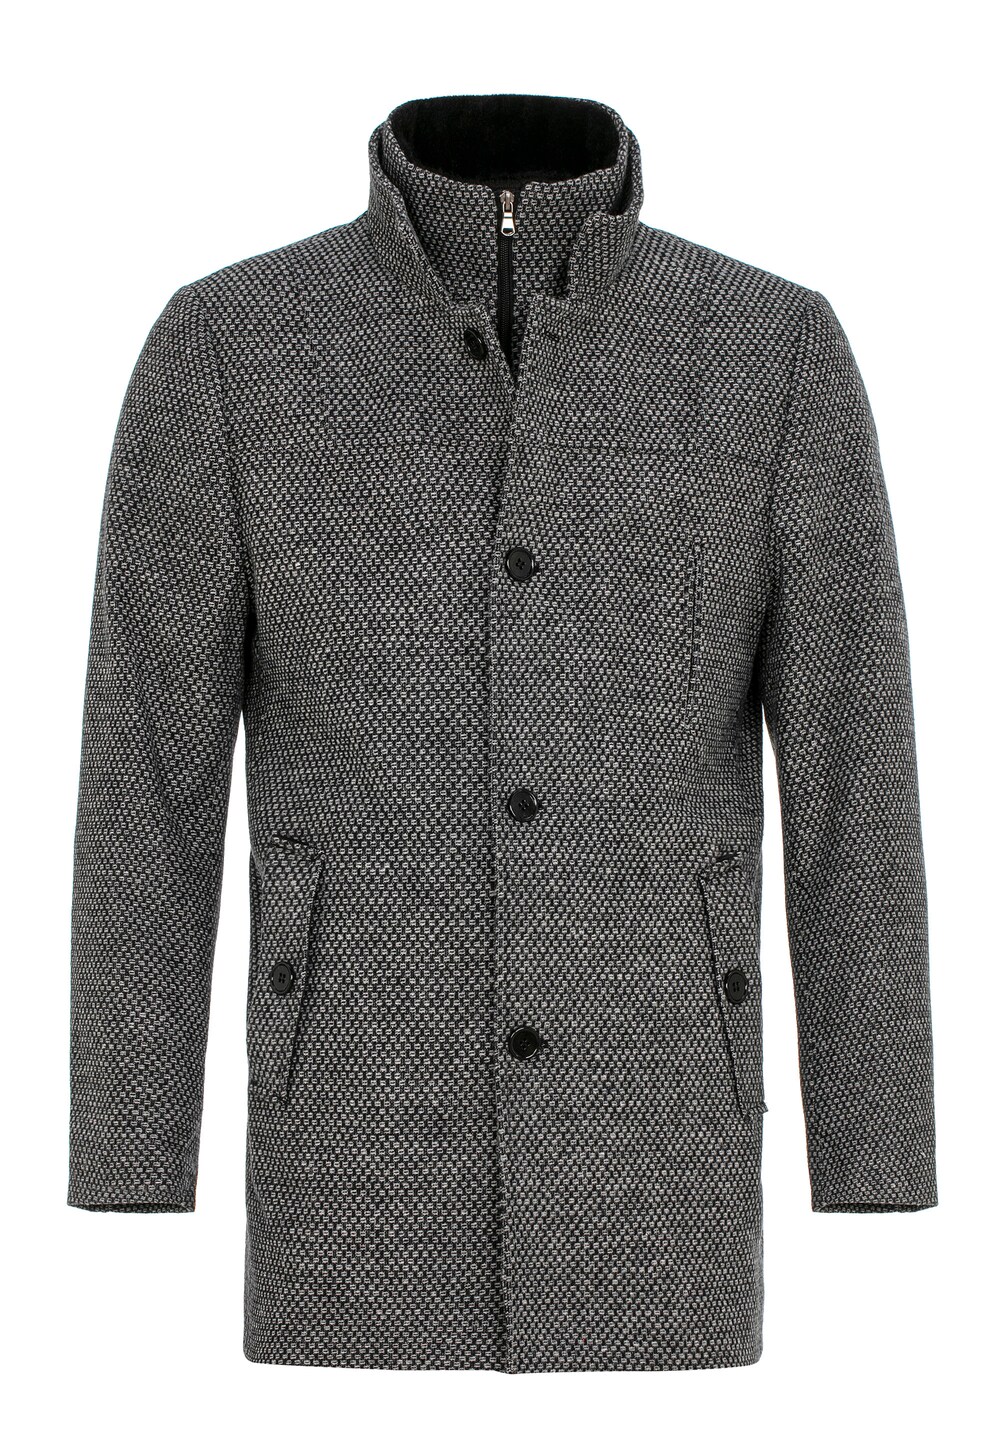 Межсезонное пальто Redbridge Cannock, серый